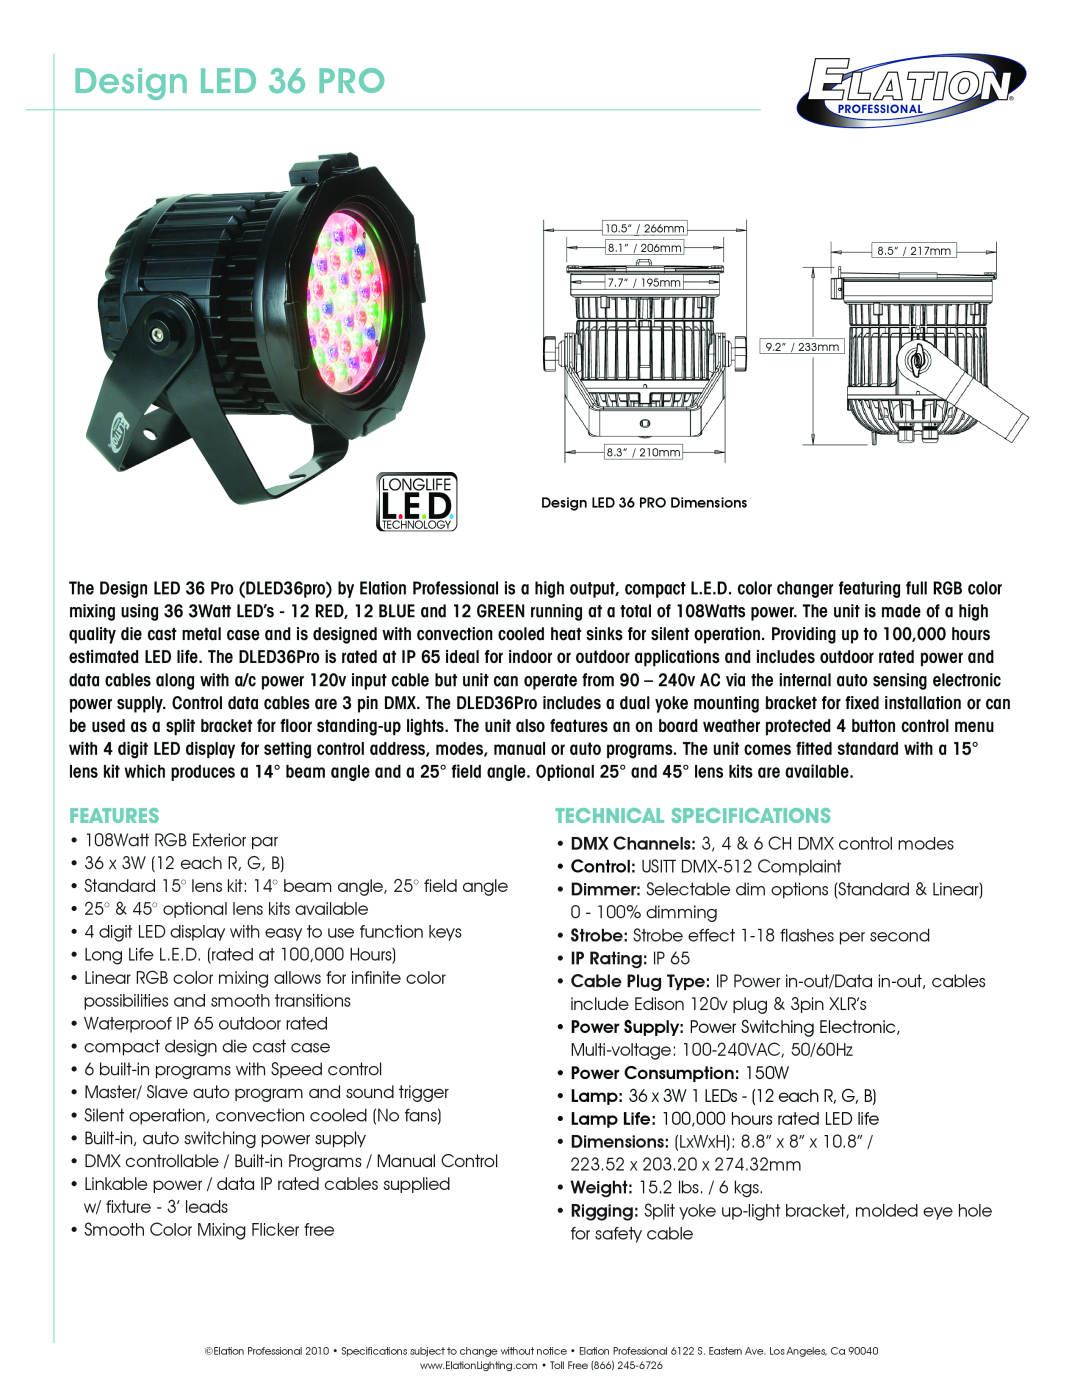 Elation Professional DLED36pro technical specifications Design LED 36 PRO, Features, Technical Specifications 